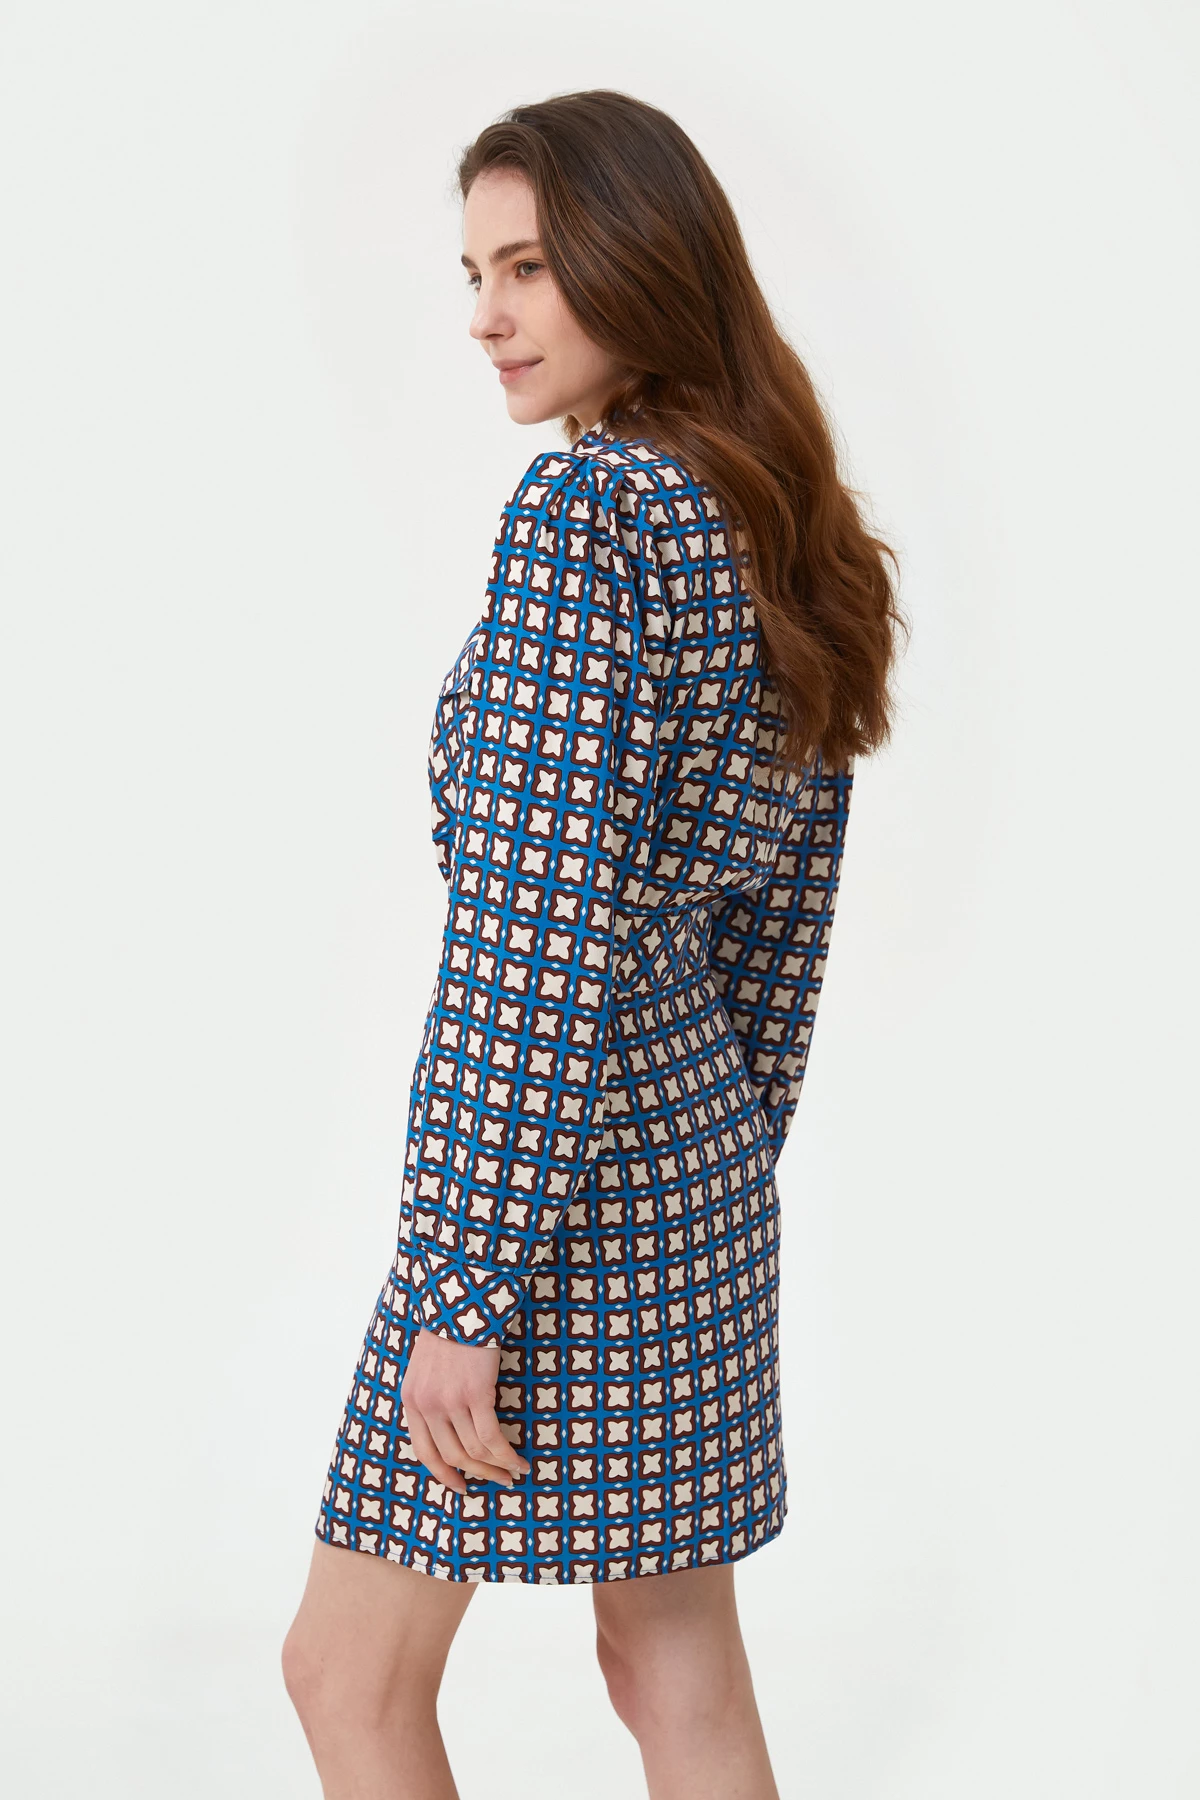 Blue short tencel dress with shirt collar in geometric print, photo 3